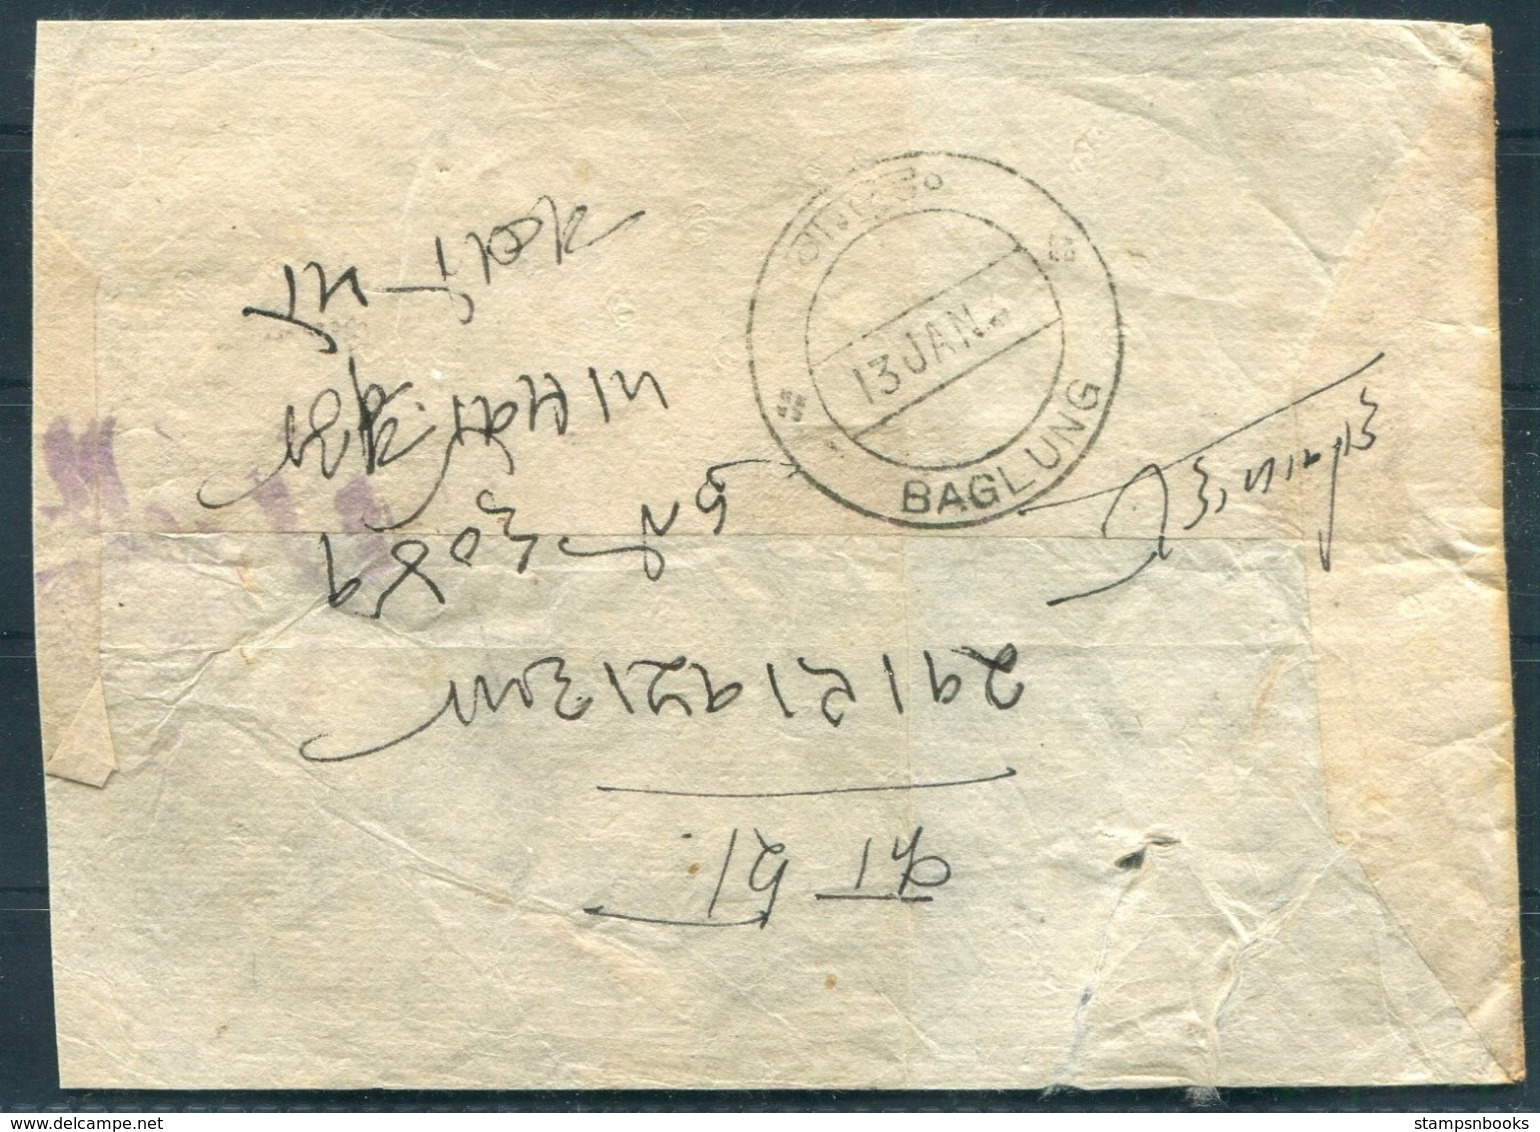 1960-75 Nepal x 3 Registration / Bi-Lingual postmark covers